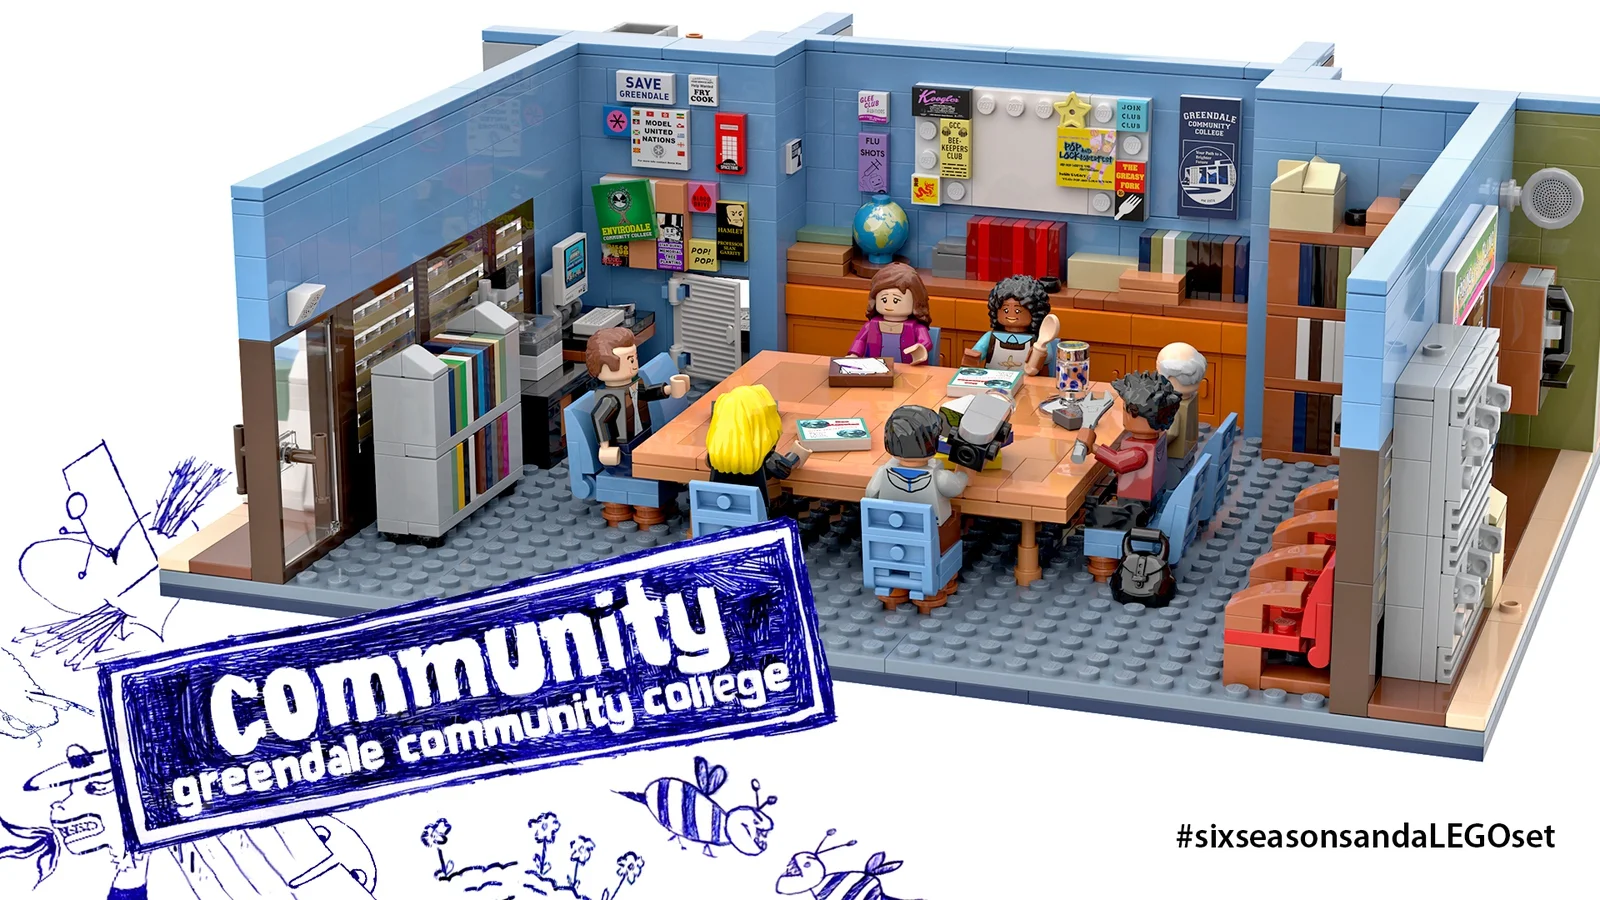 2\. Community — Greendale Community College